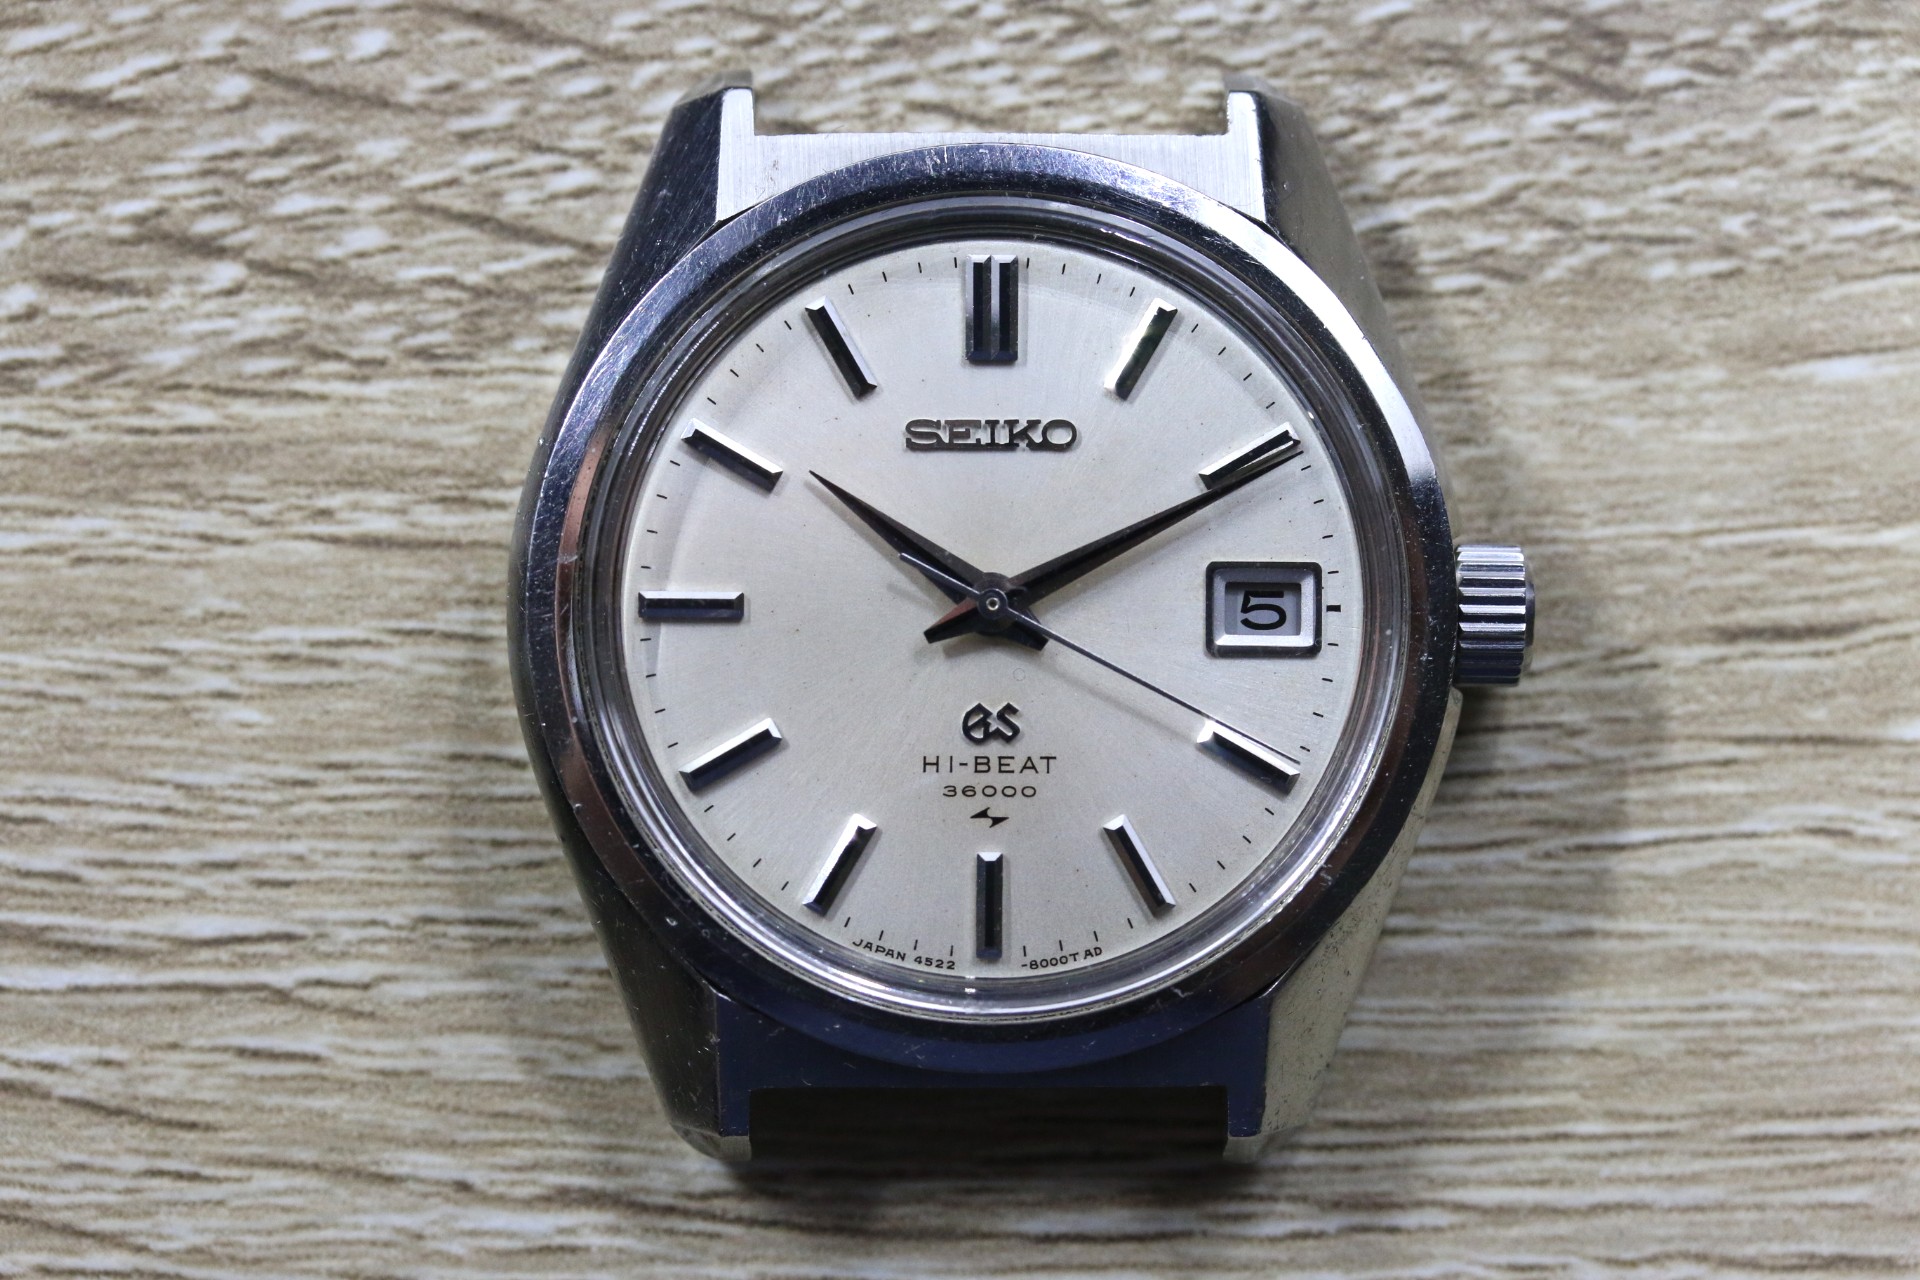 FS - Vintage Grand Seiko 4522-8000 | Omega Forums